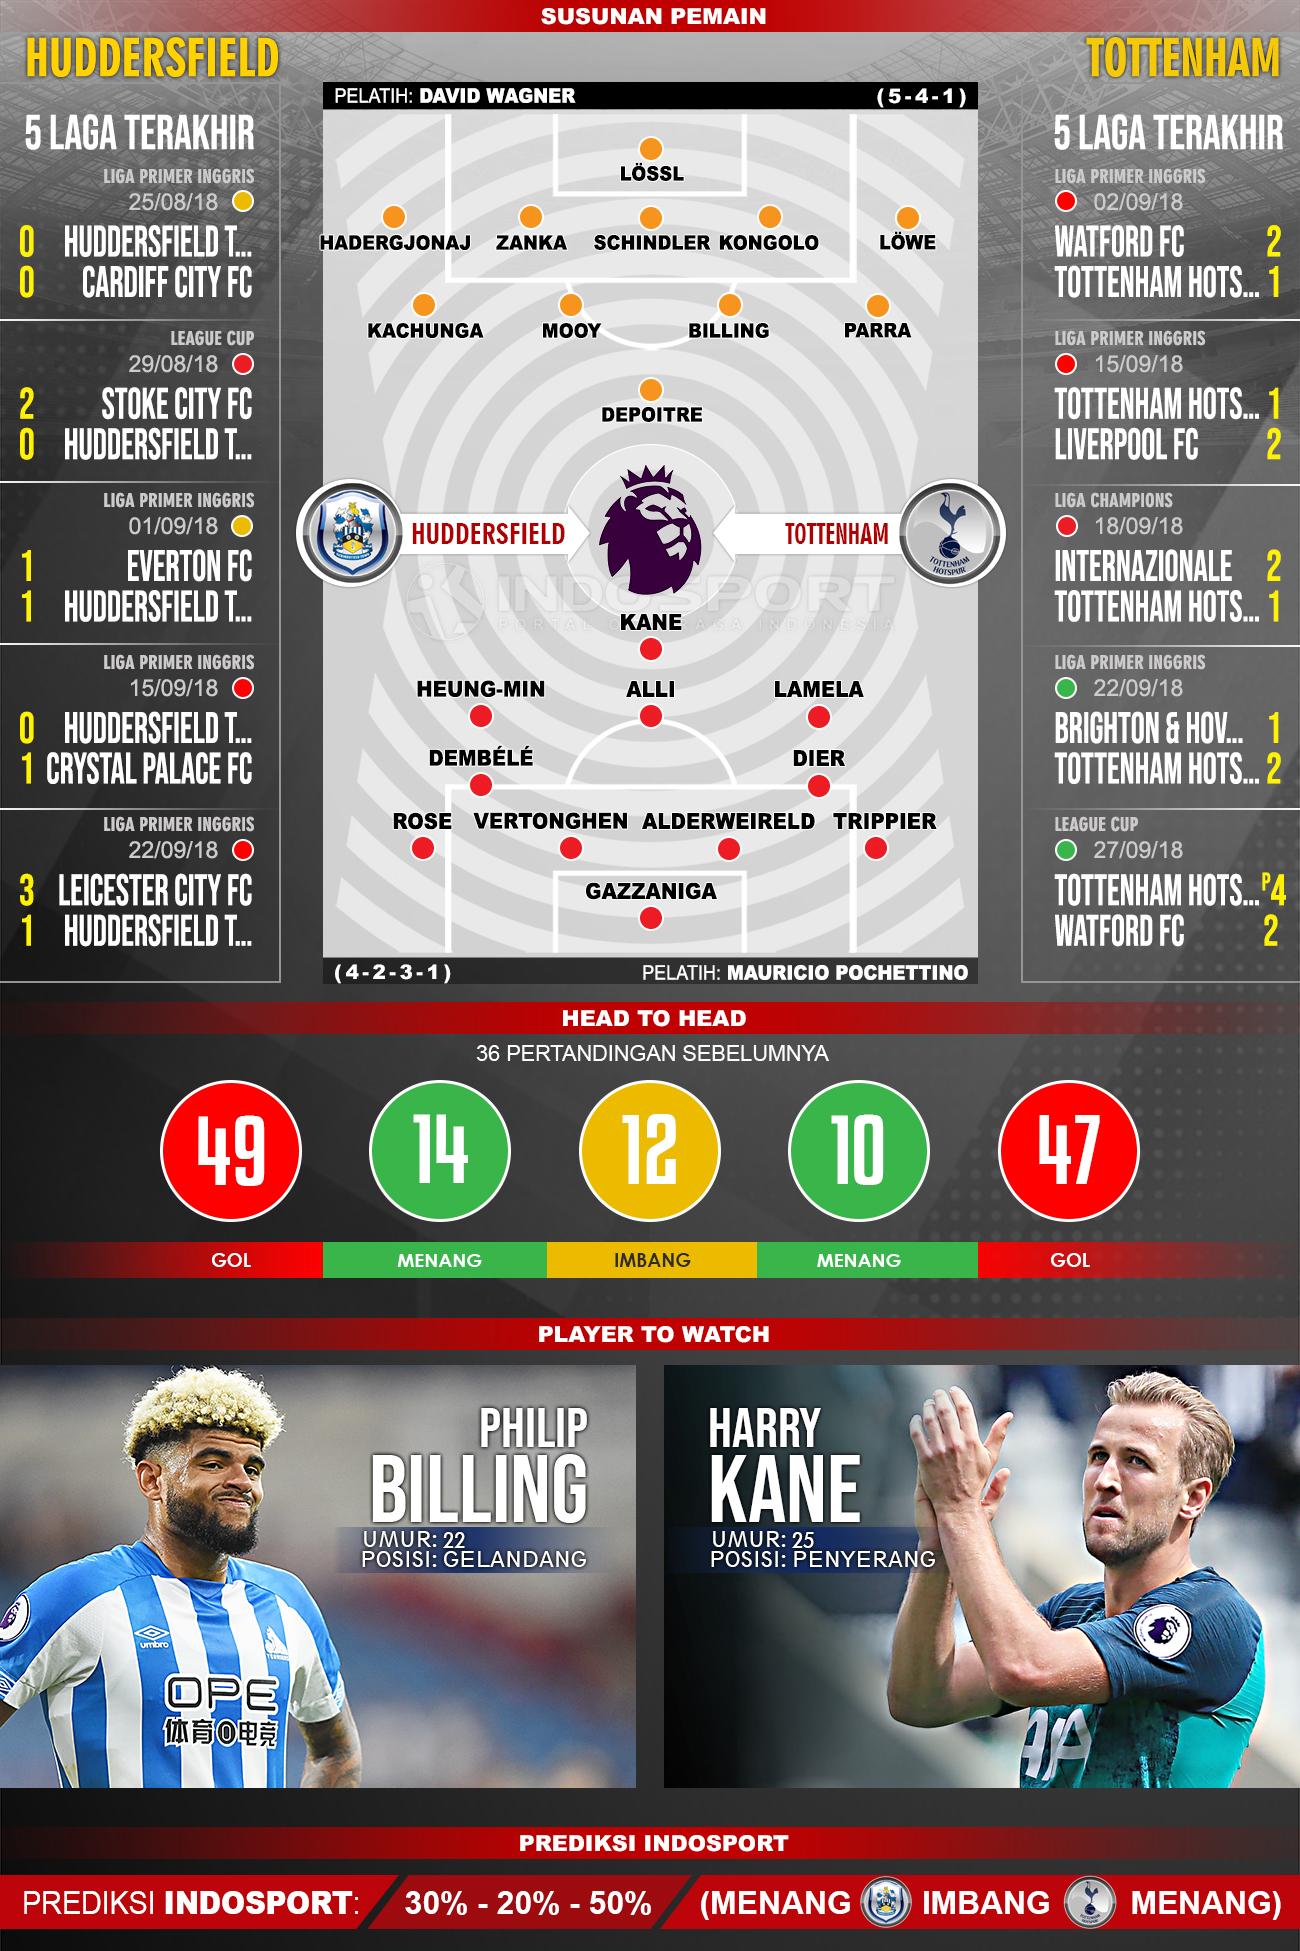 Huddersfield vs Tottenham Hotspur (Susunan Pemain - Lima Laga Terakhir - Player to Watch - Prediksi Indosport) Copyright: Indosport.com